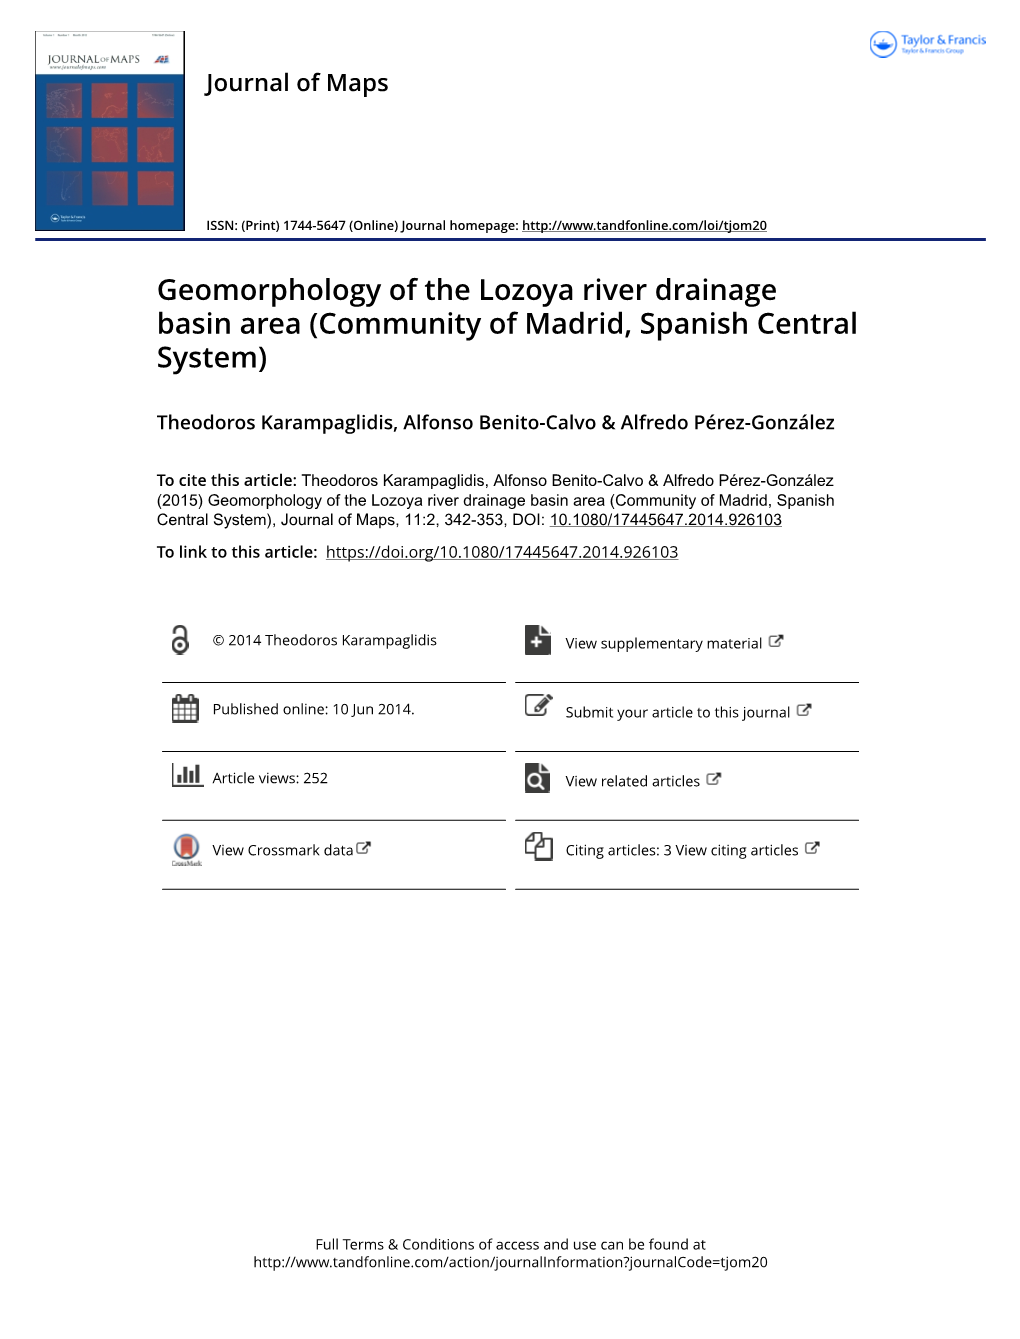 Geomorphology of the Lozoya River Drainage Basin Area (Community of Madrid, Spanish Central System)